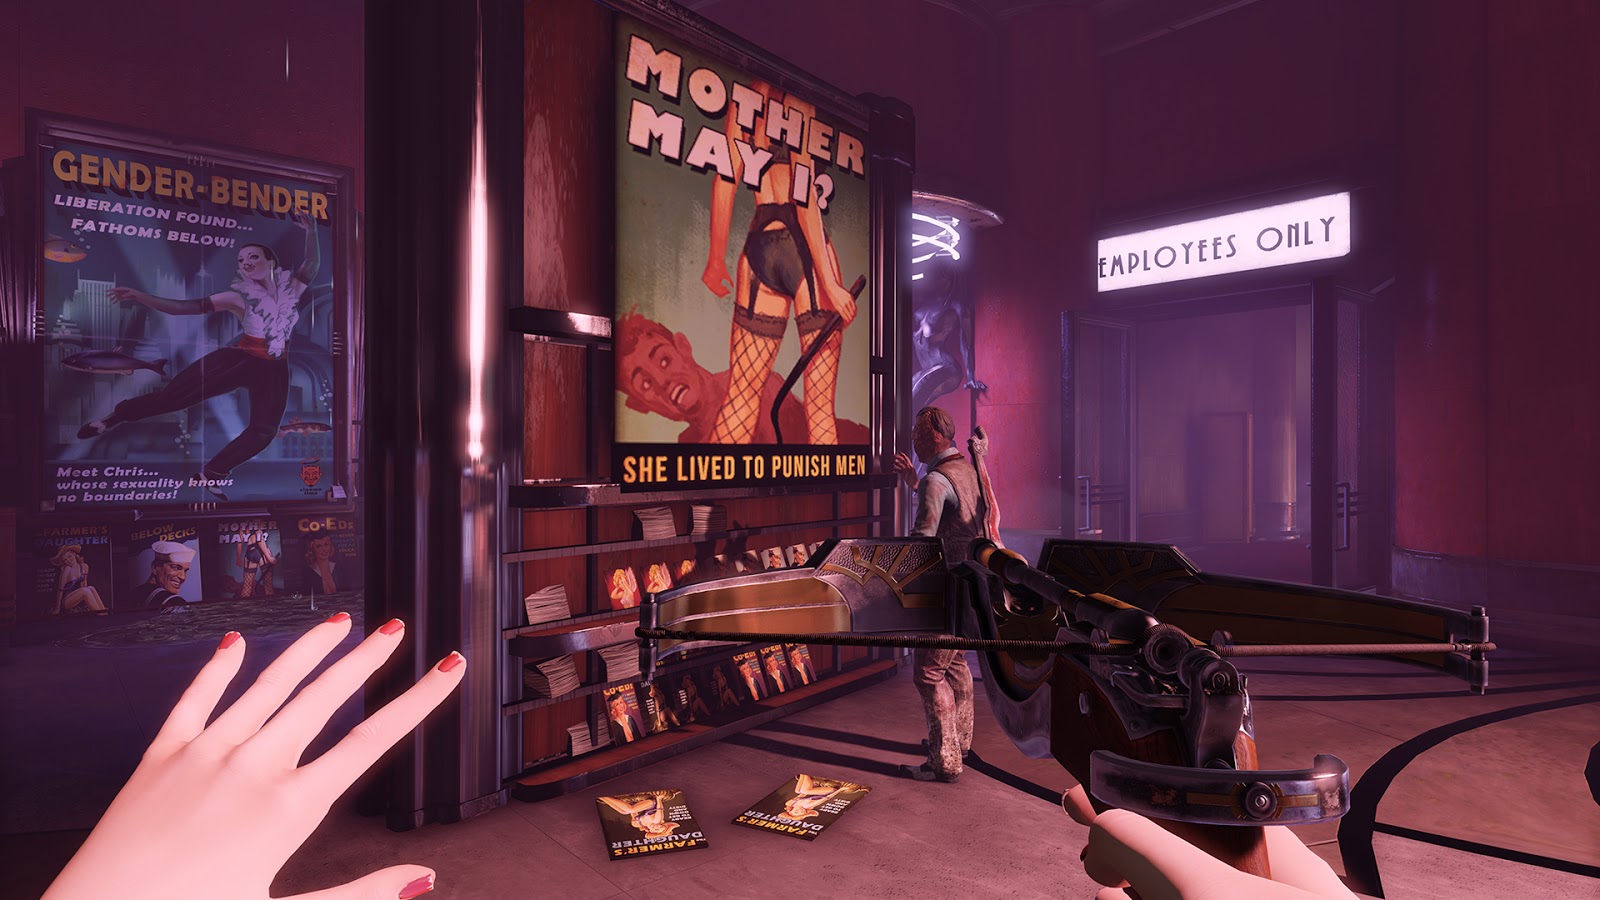 BioShock Remastered PS4 videos - Gamersyde